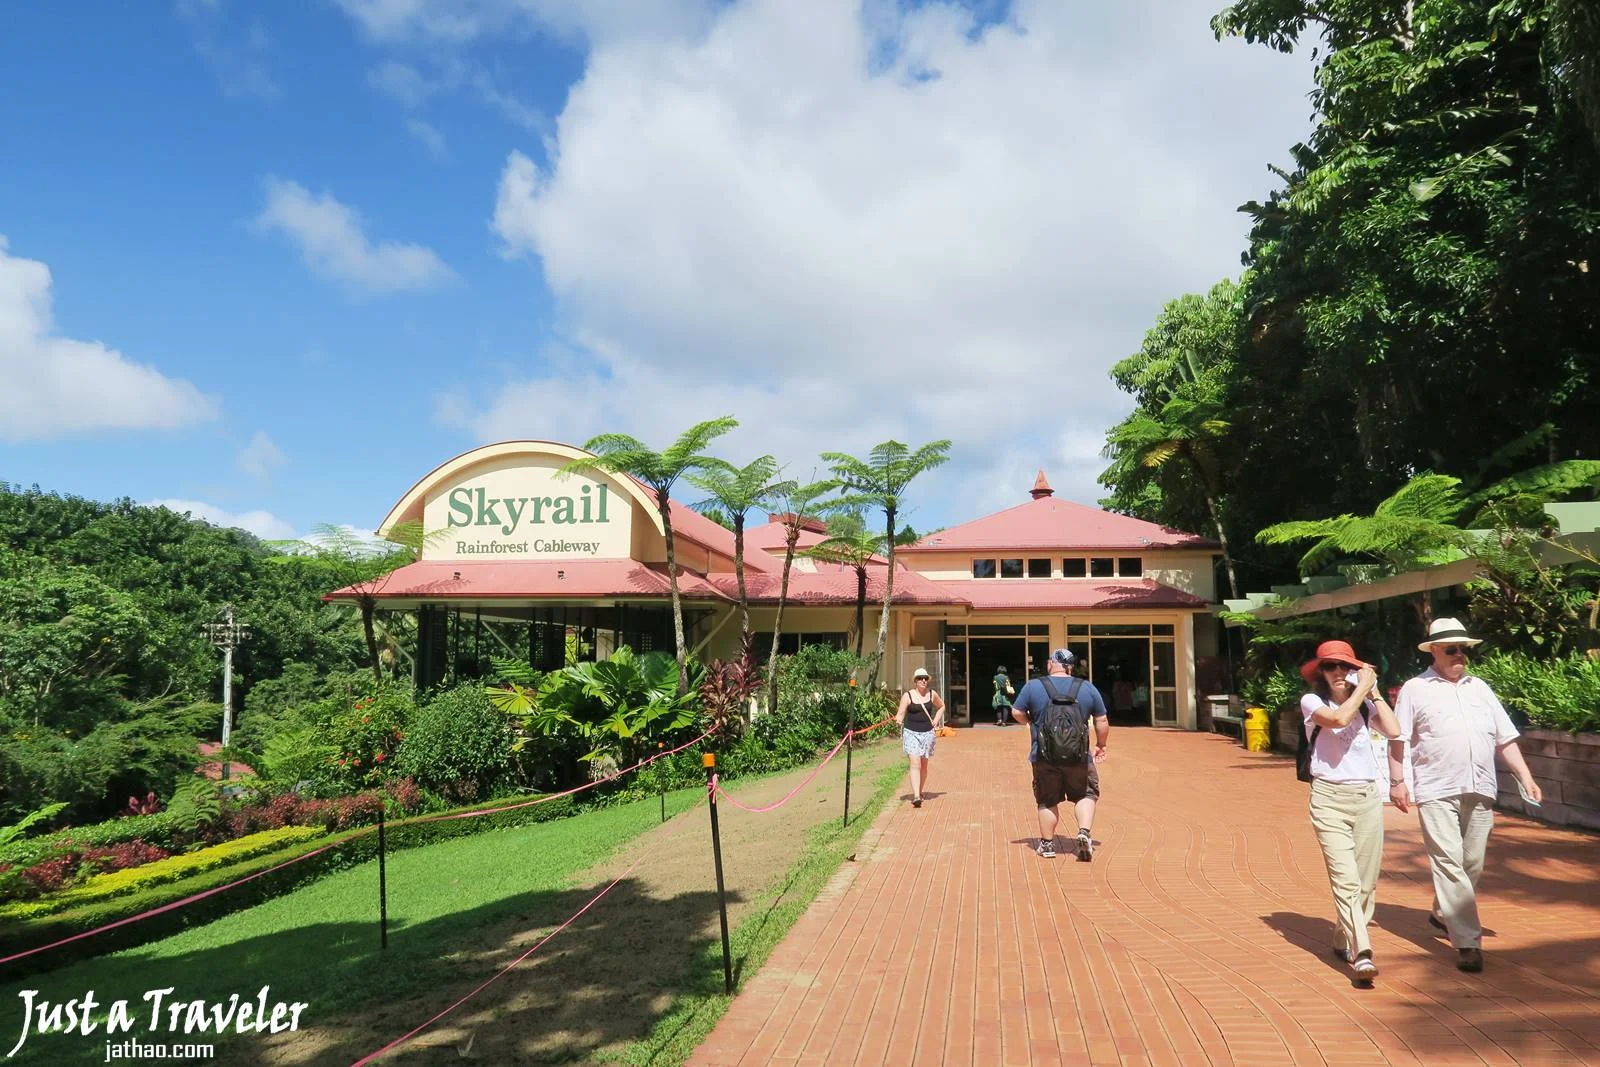 凱恩斯-庫蘭達-庫蘭達交通-庫蘭達觀光纜車-自由行-旅遊-澳洲-Cairns-Kuranda-Skyrail-Rainforest-Cableway-Travel-Tourist-Attraction-Australia